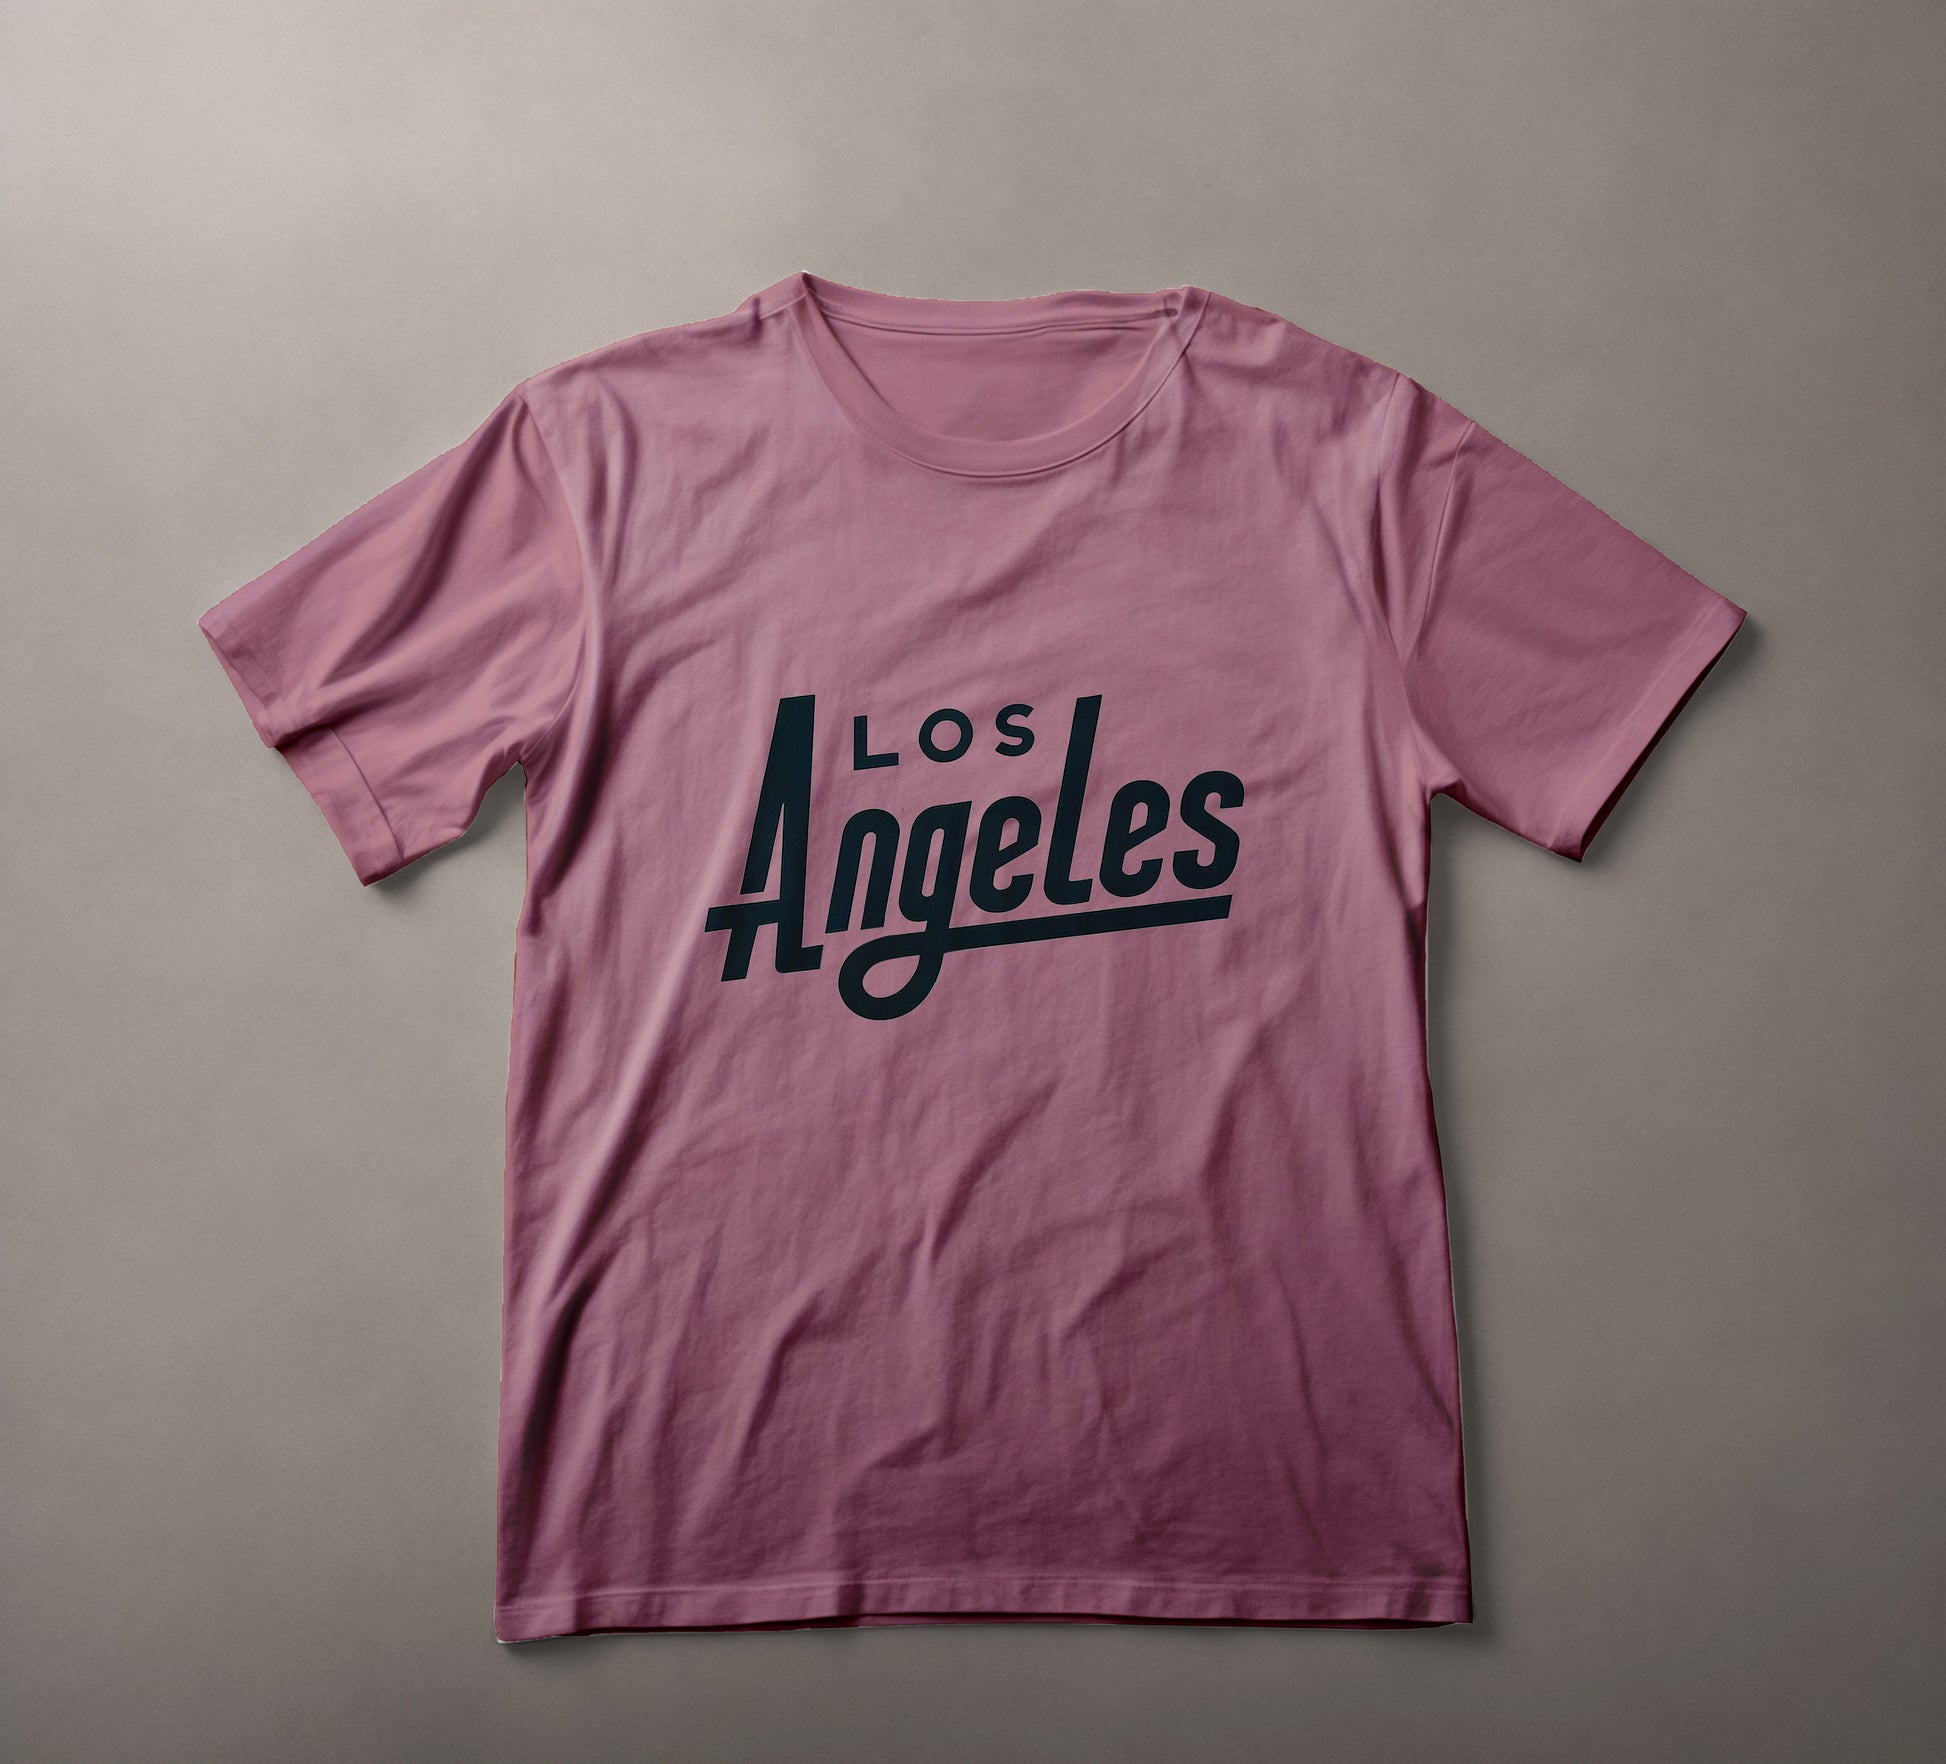 Los Angeles typography, city pride t-shirt, bold lettering, fashion statement, urban apparel, classic font design, travel souvenir, casual wear, stylish graphic tee, destination branding